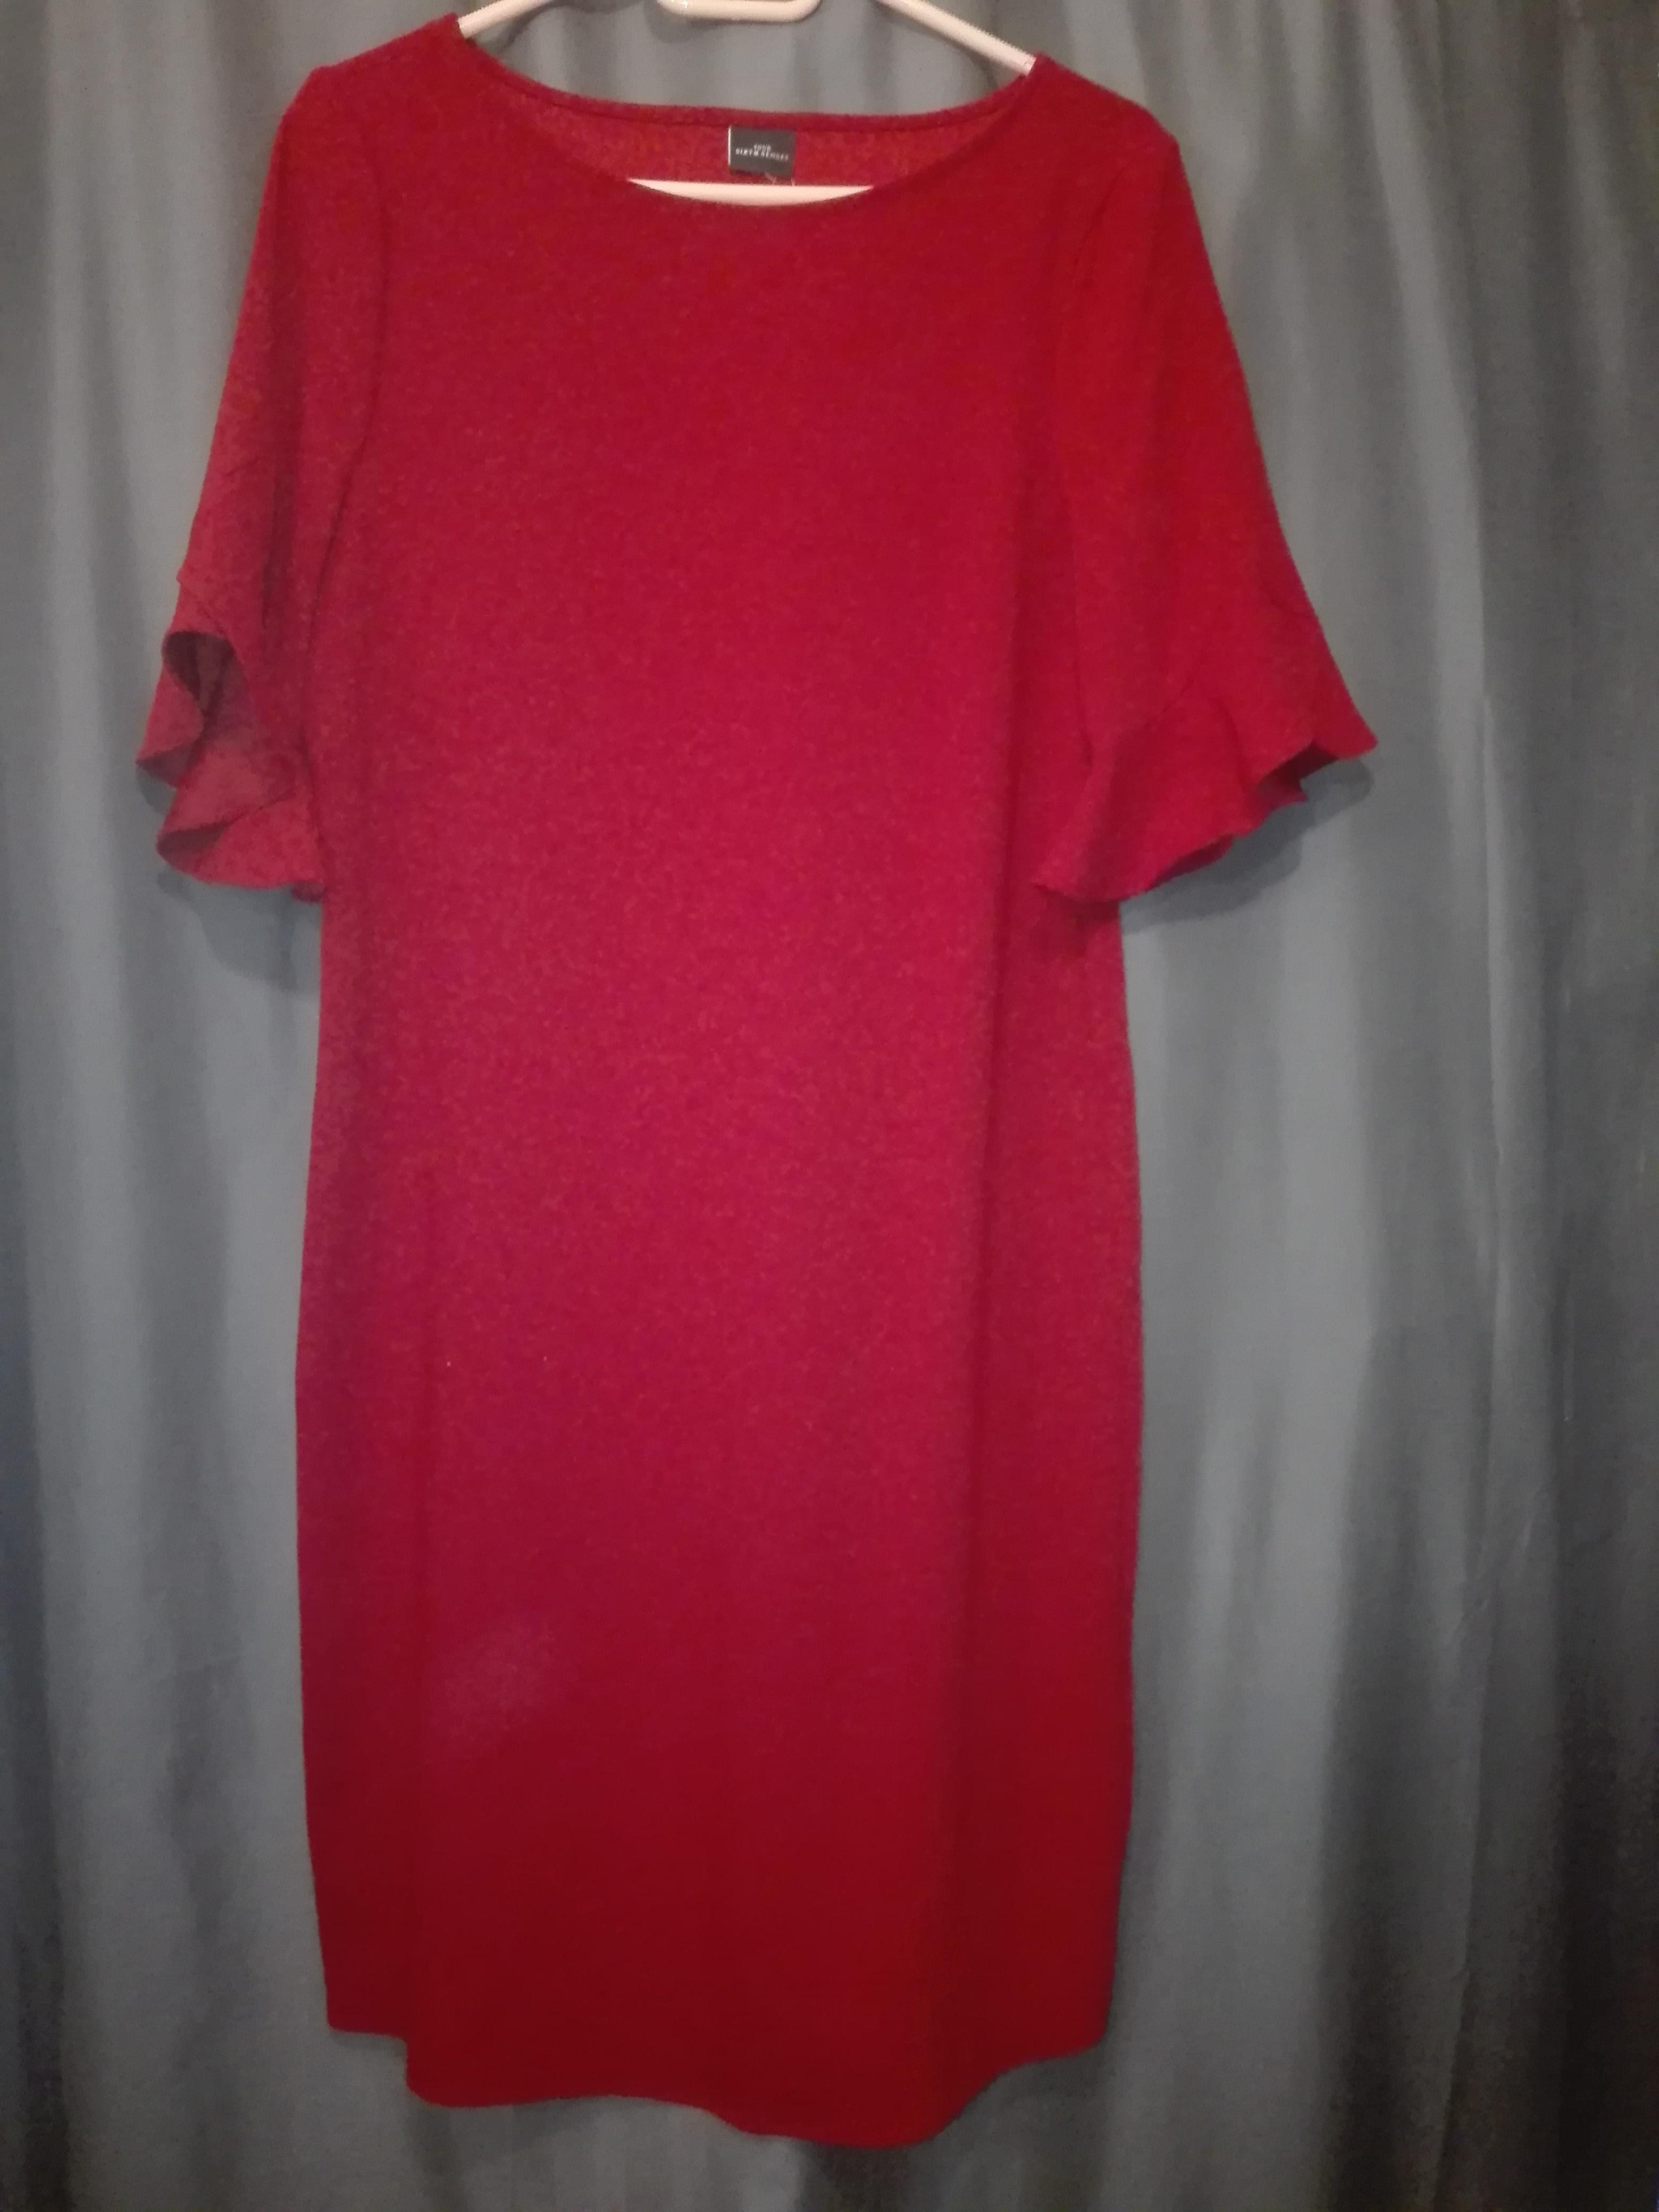 troc de troc robe rouge t38 image 1